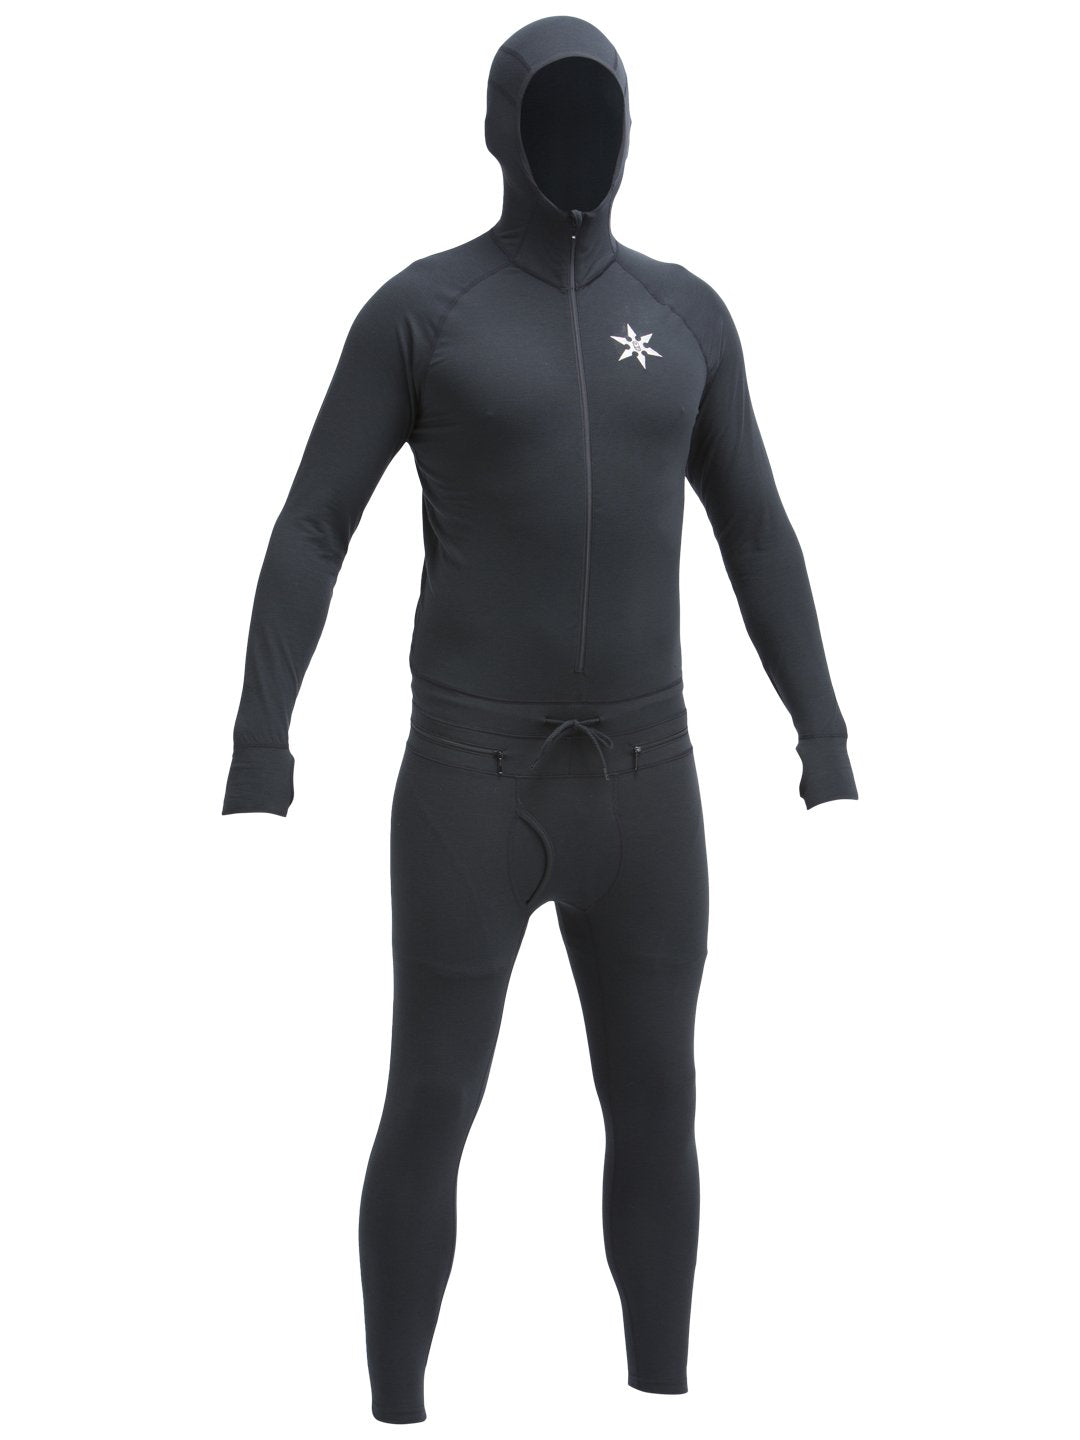 Base layer white jumpsuit - Thermal underwear black one piece